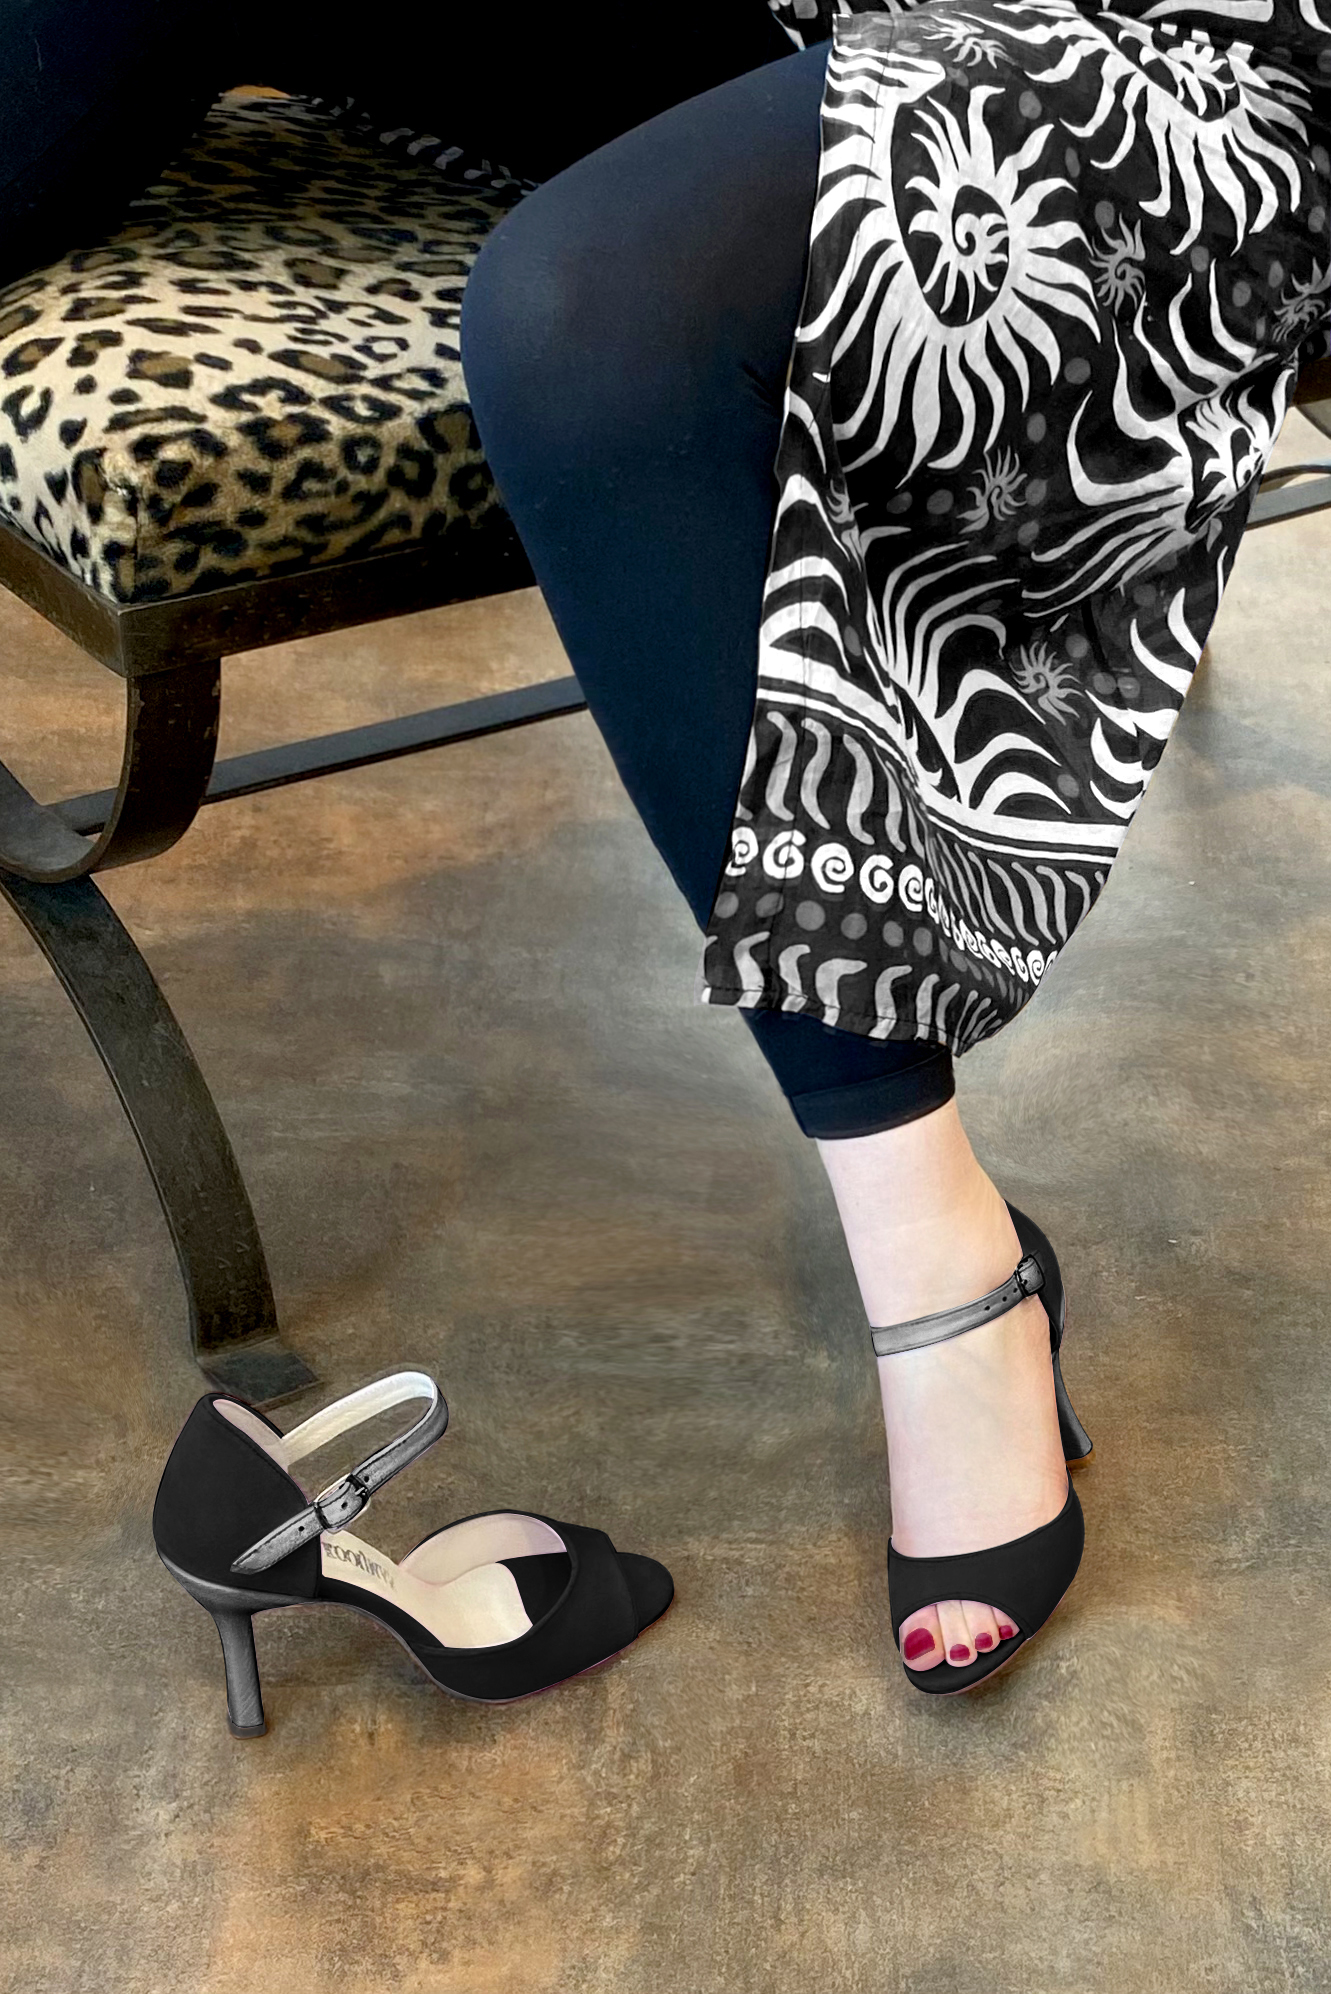 Matt black and dark silver women's closed back sandals, with an instep strap. Round toe. High spool heels. Worn view - Florence KOOIJMAN